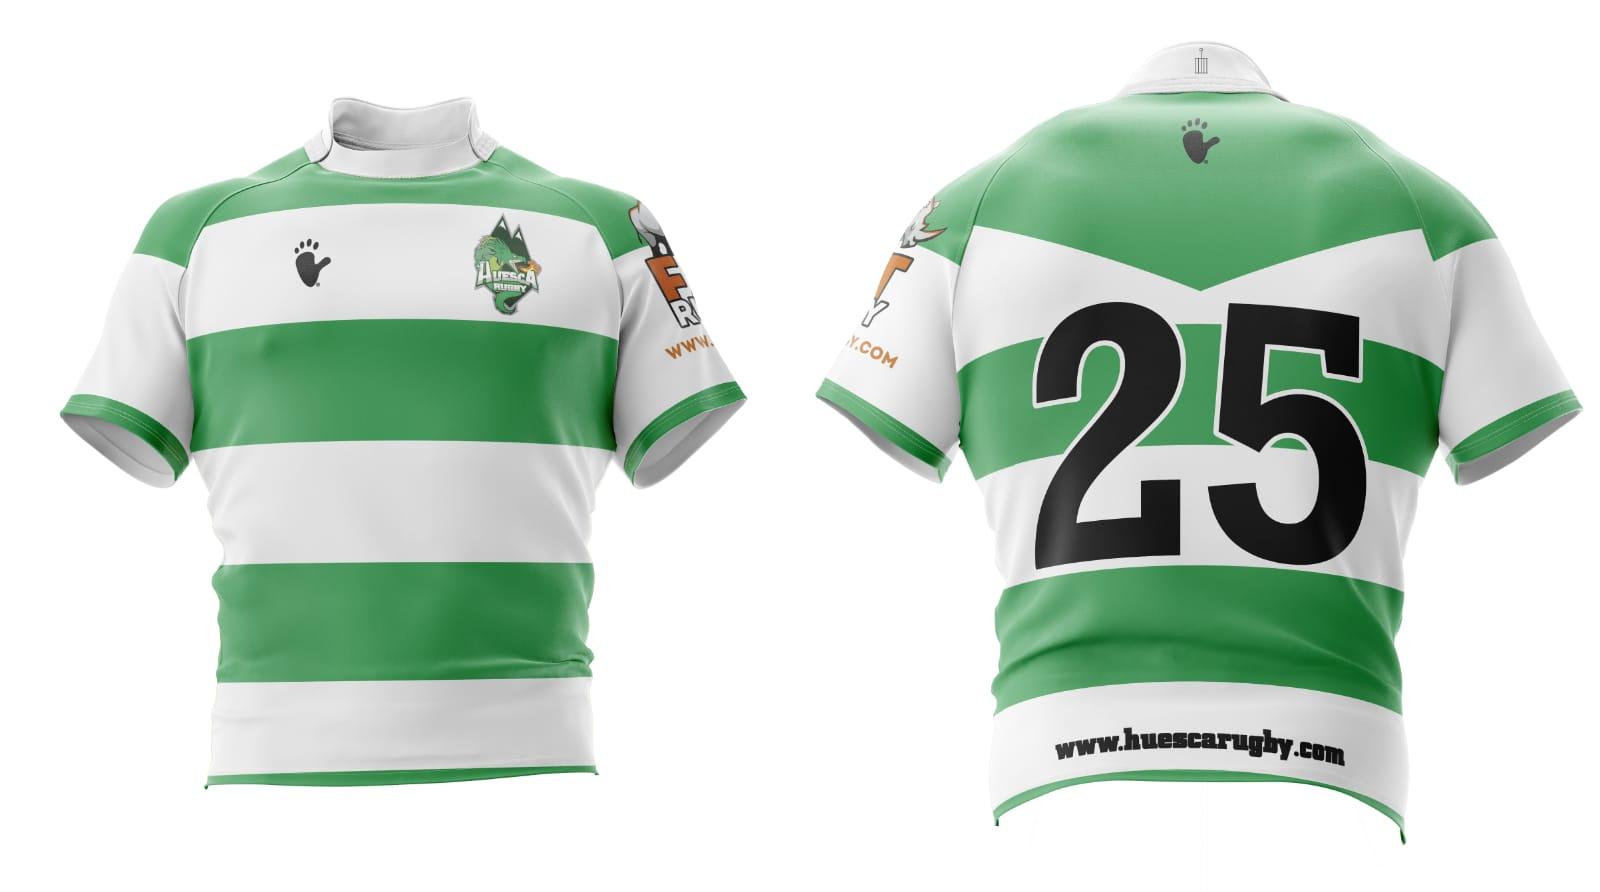 Camiseta Juego Huesca Rugby - Talla 10